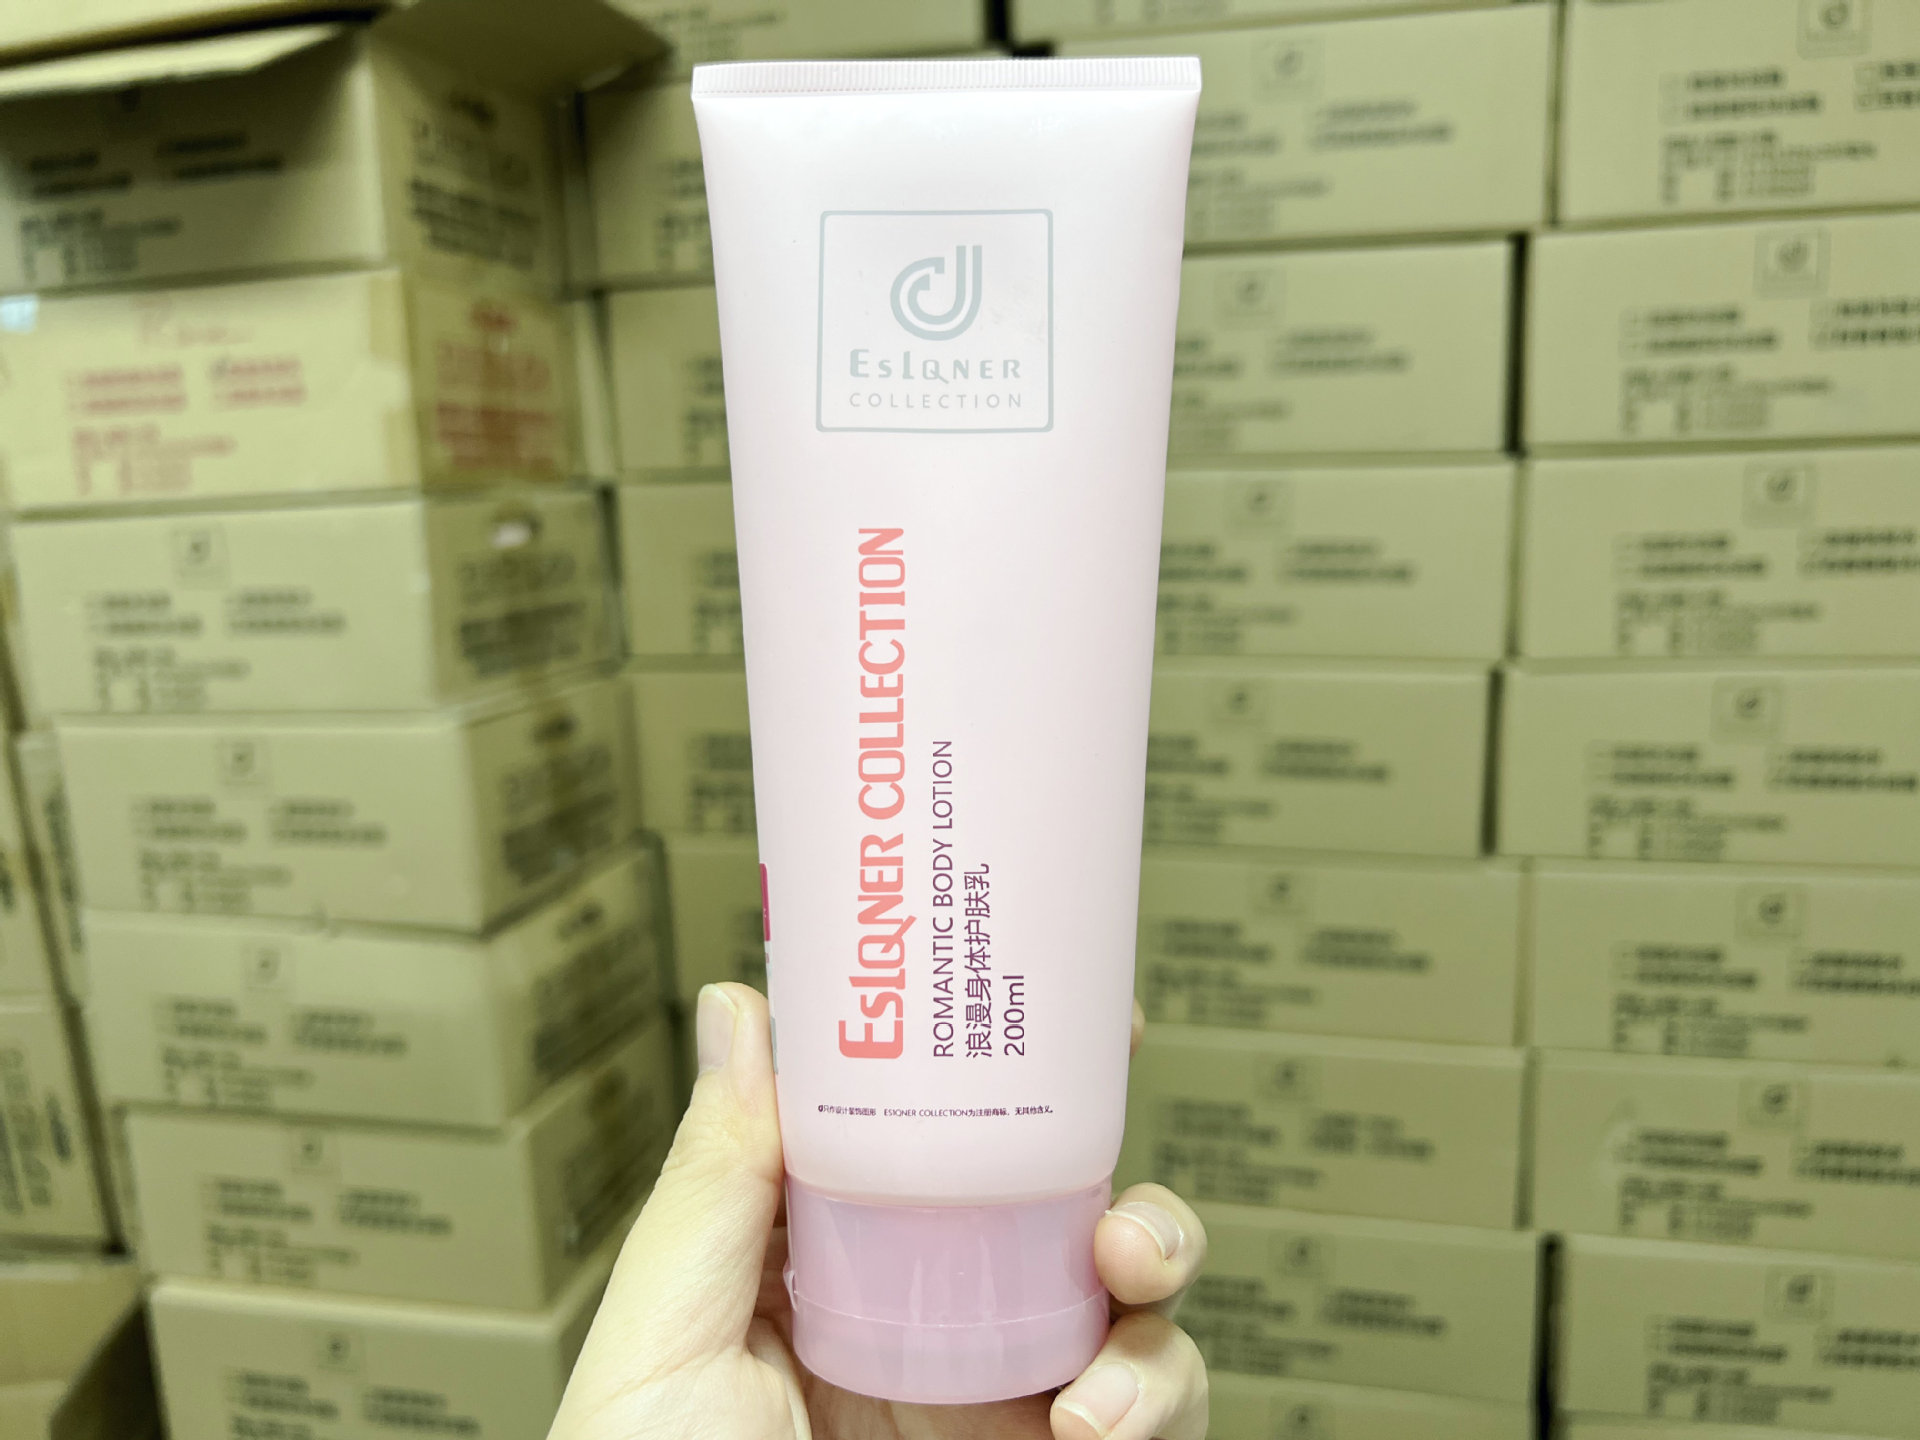 Cosway Romantic Body Cream 200ml Pink Body Cream Refreshing Non-greasy Moisturizing Lotion Malaysia